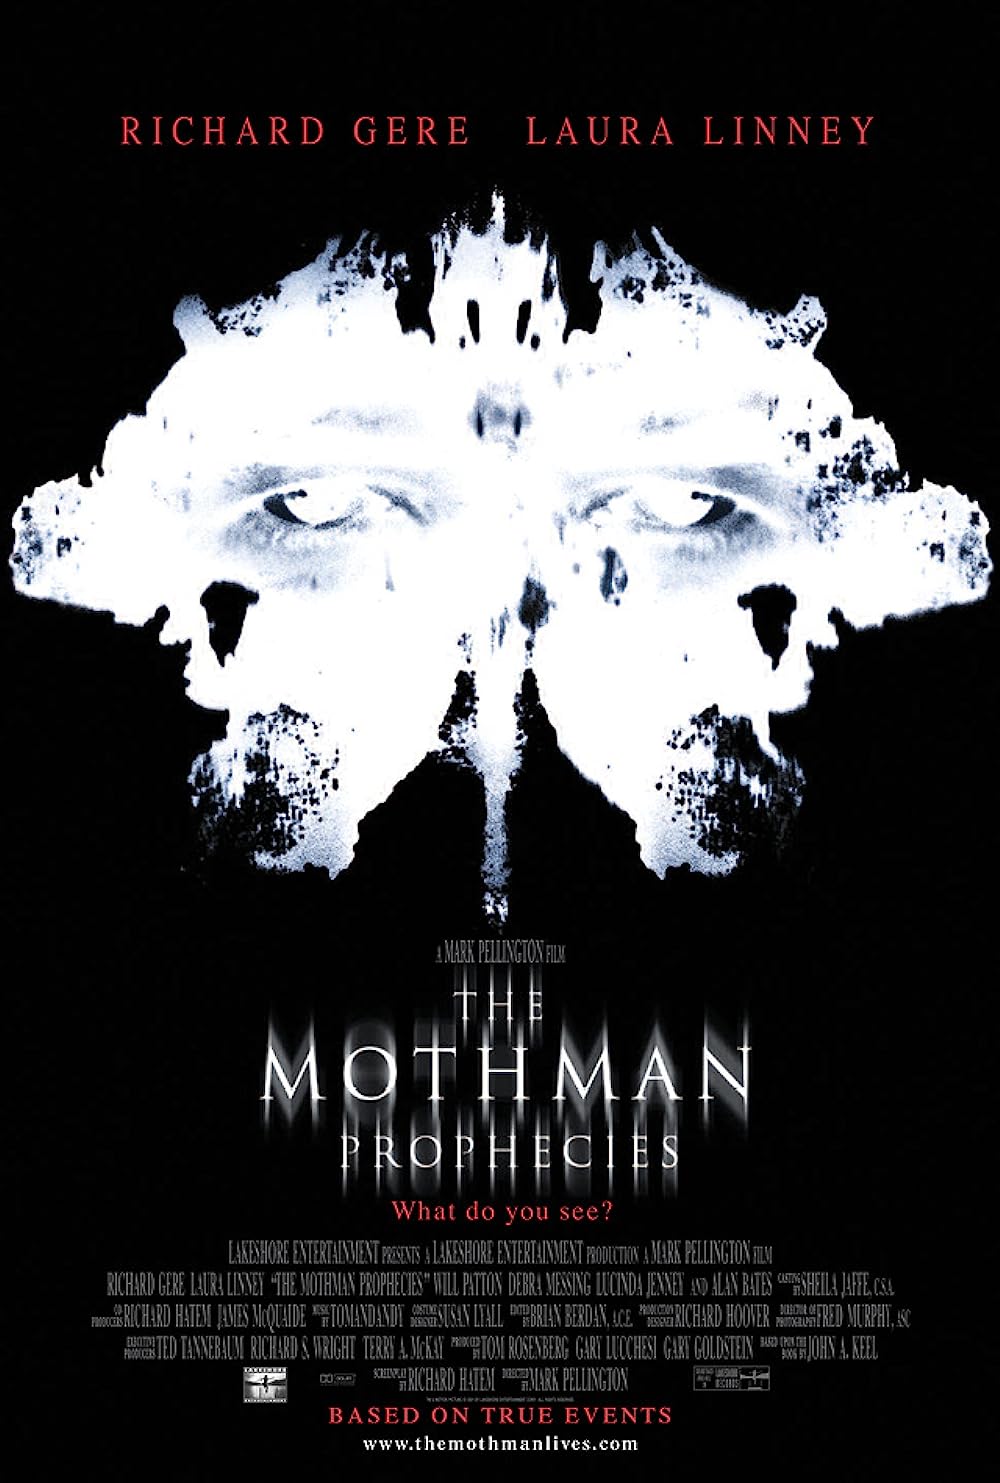 image for the mothman prophecies